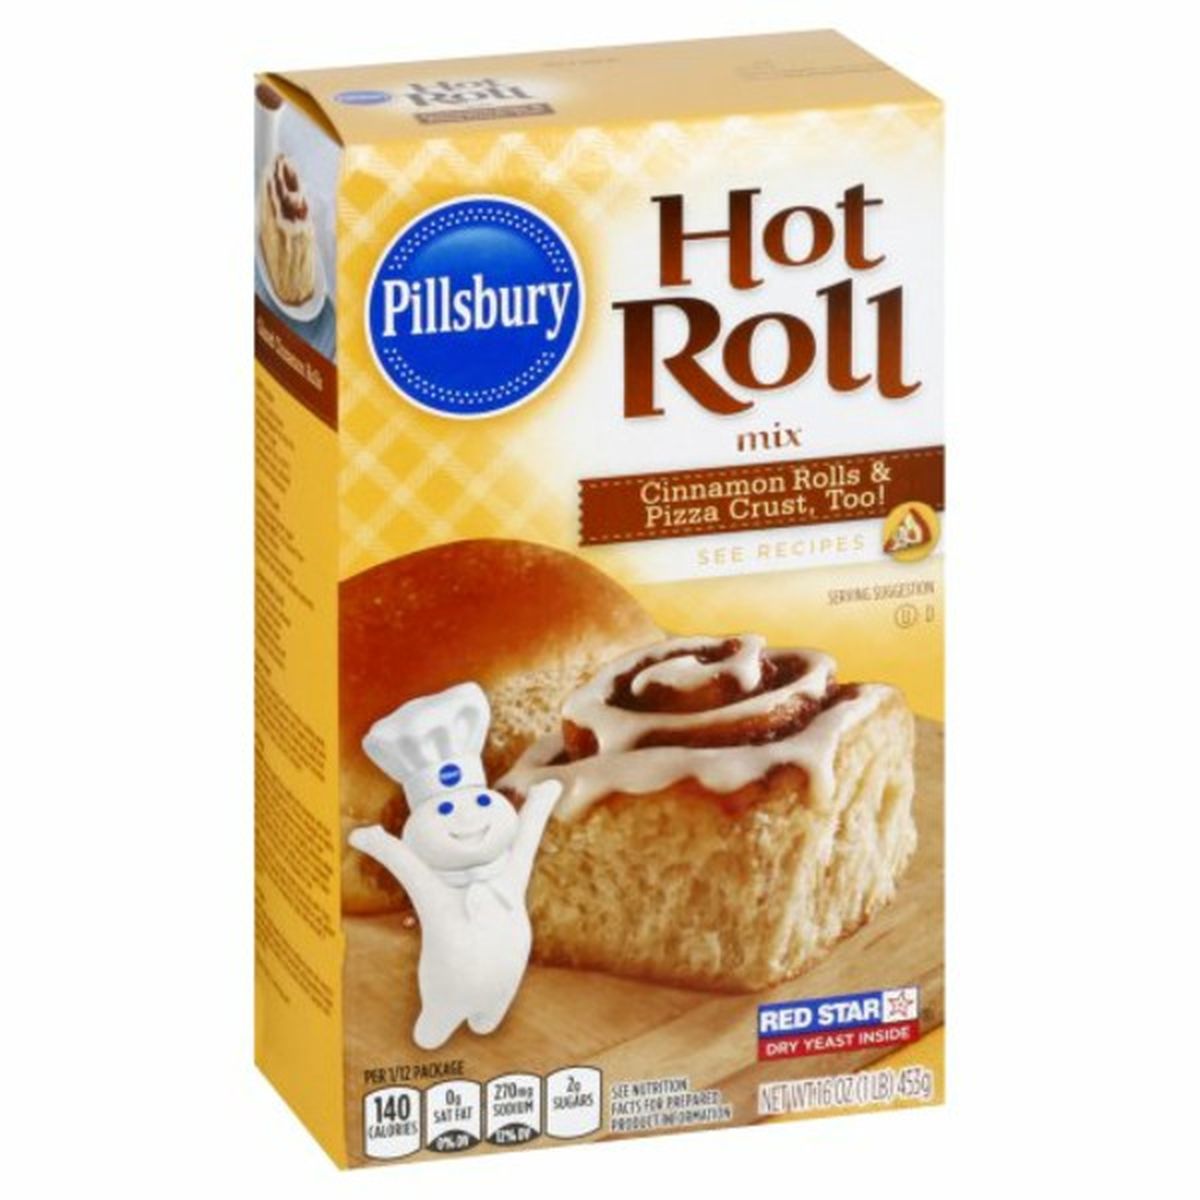 Calories in Pillsbury Hot Roll Mix